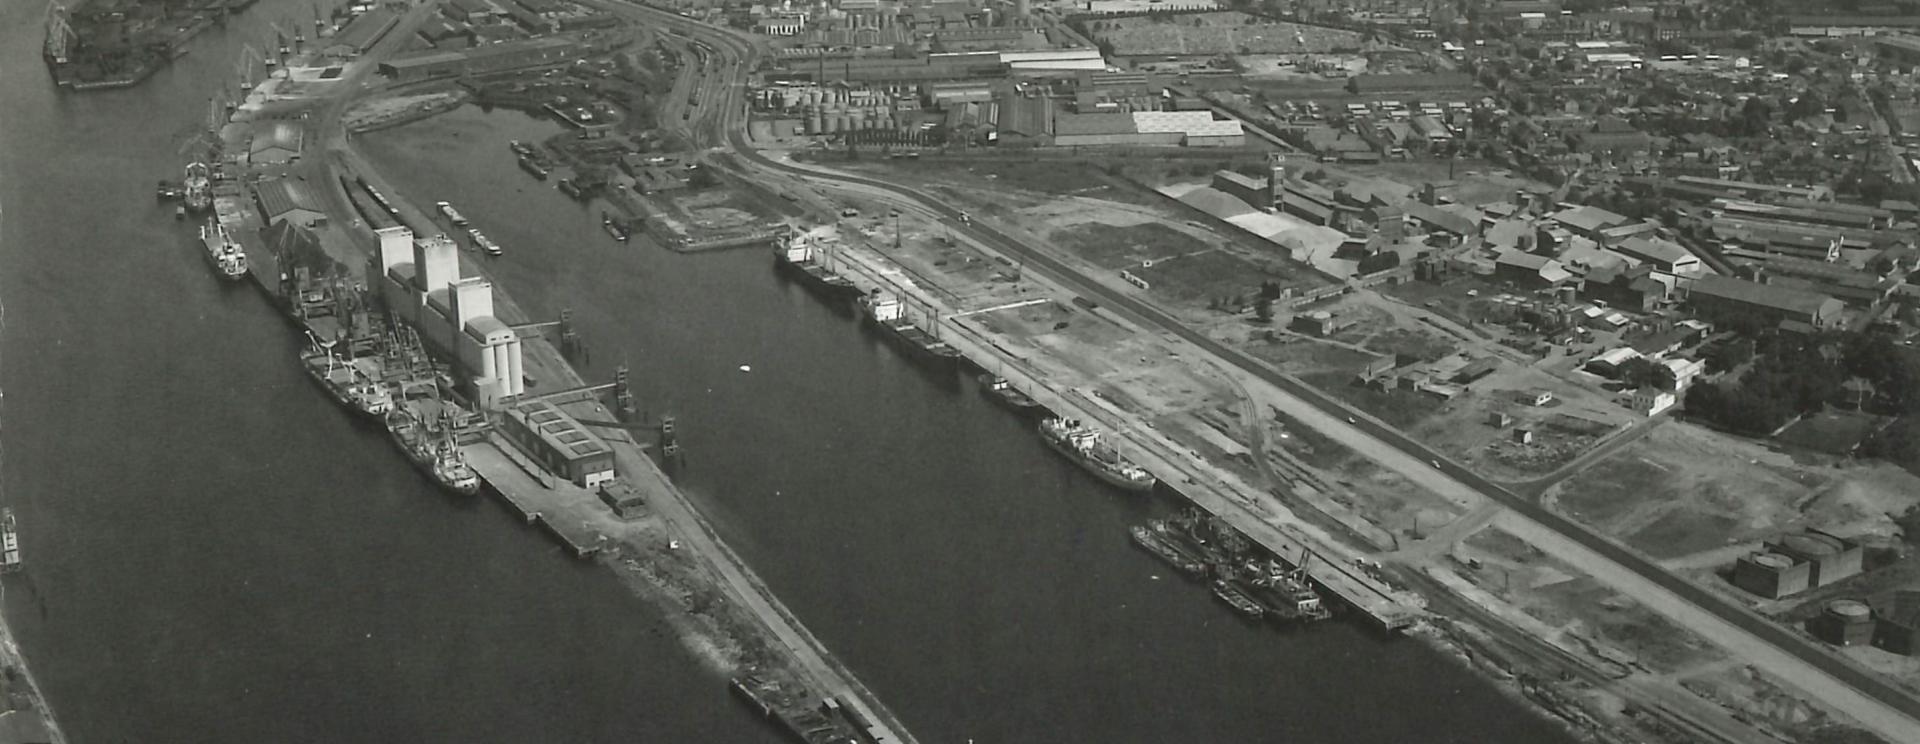 Terminal céréalier et bassin Rouen Quevilly en 1970 